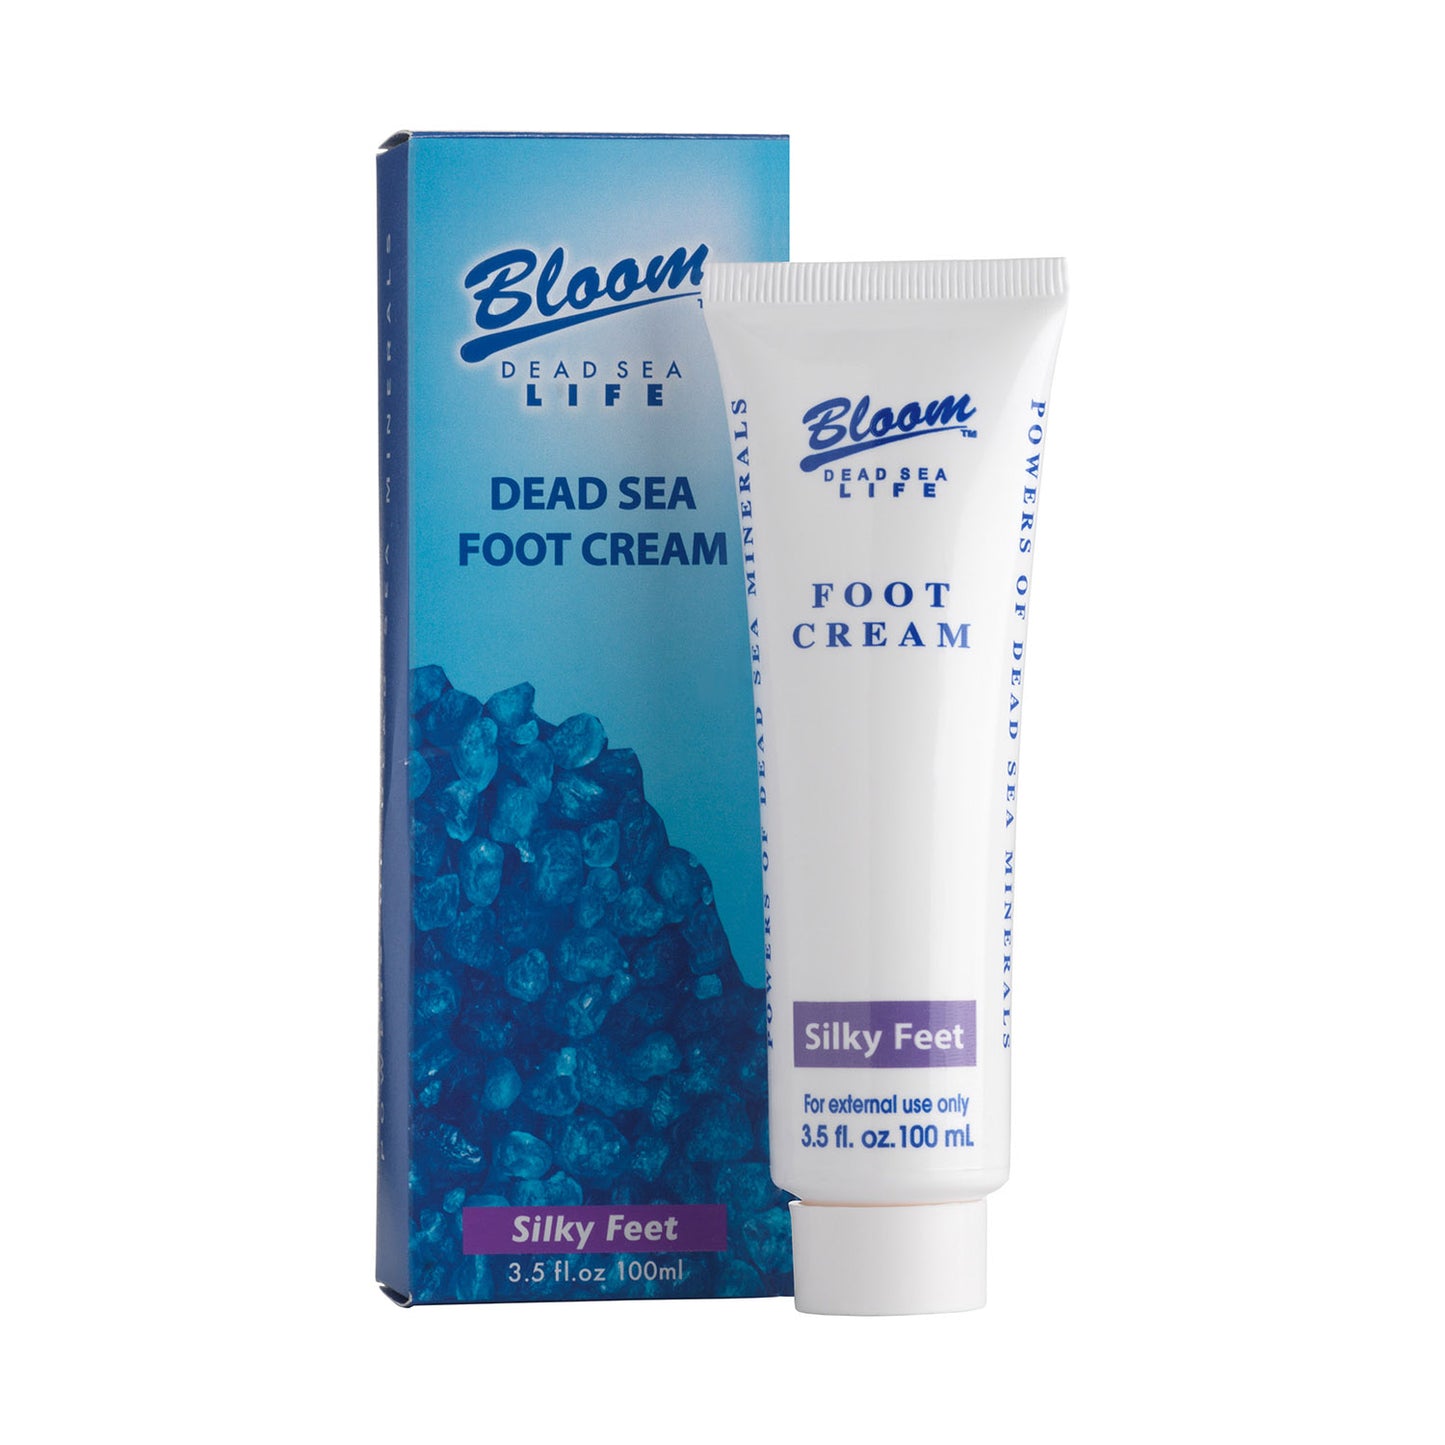 Bloom Dead Sea Foot cream 100ml Tube